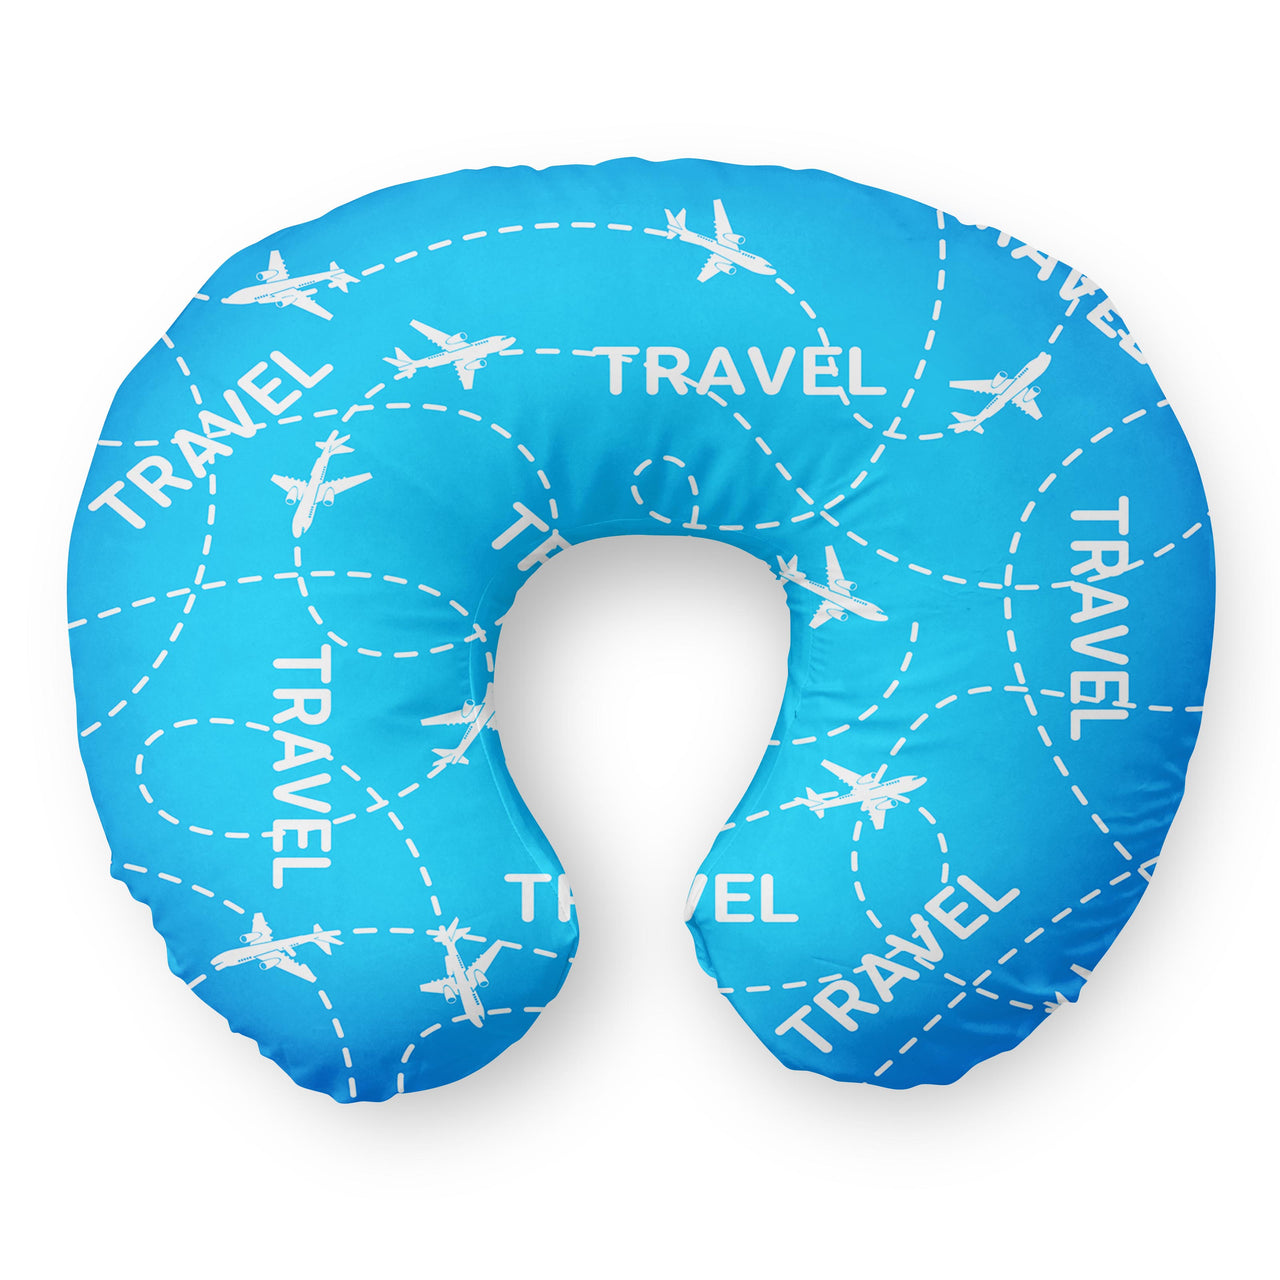 Travel & Planes Travel & Boppy Pillows